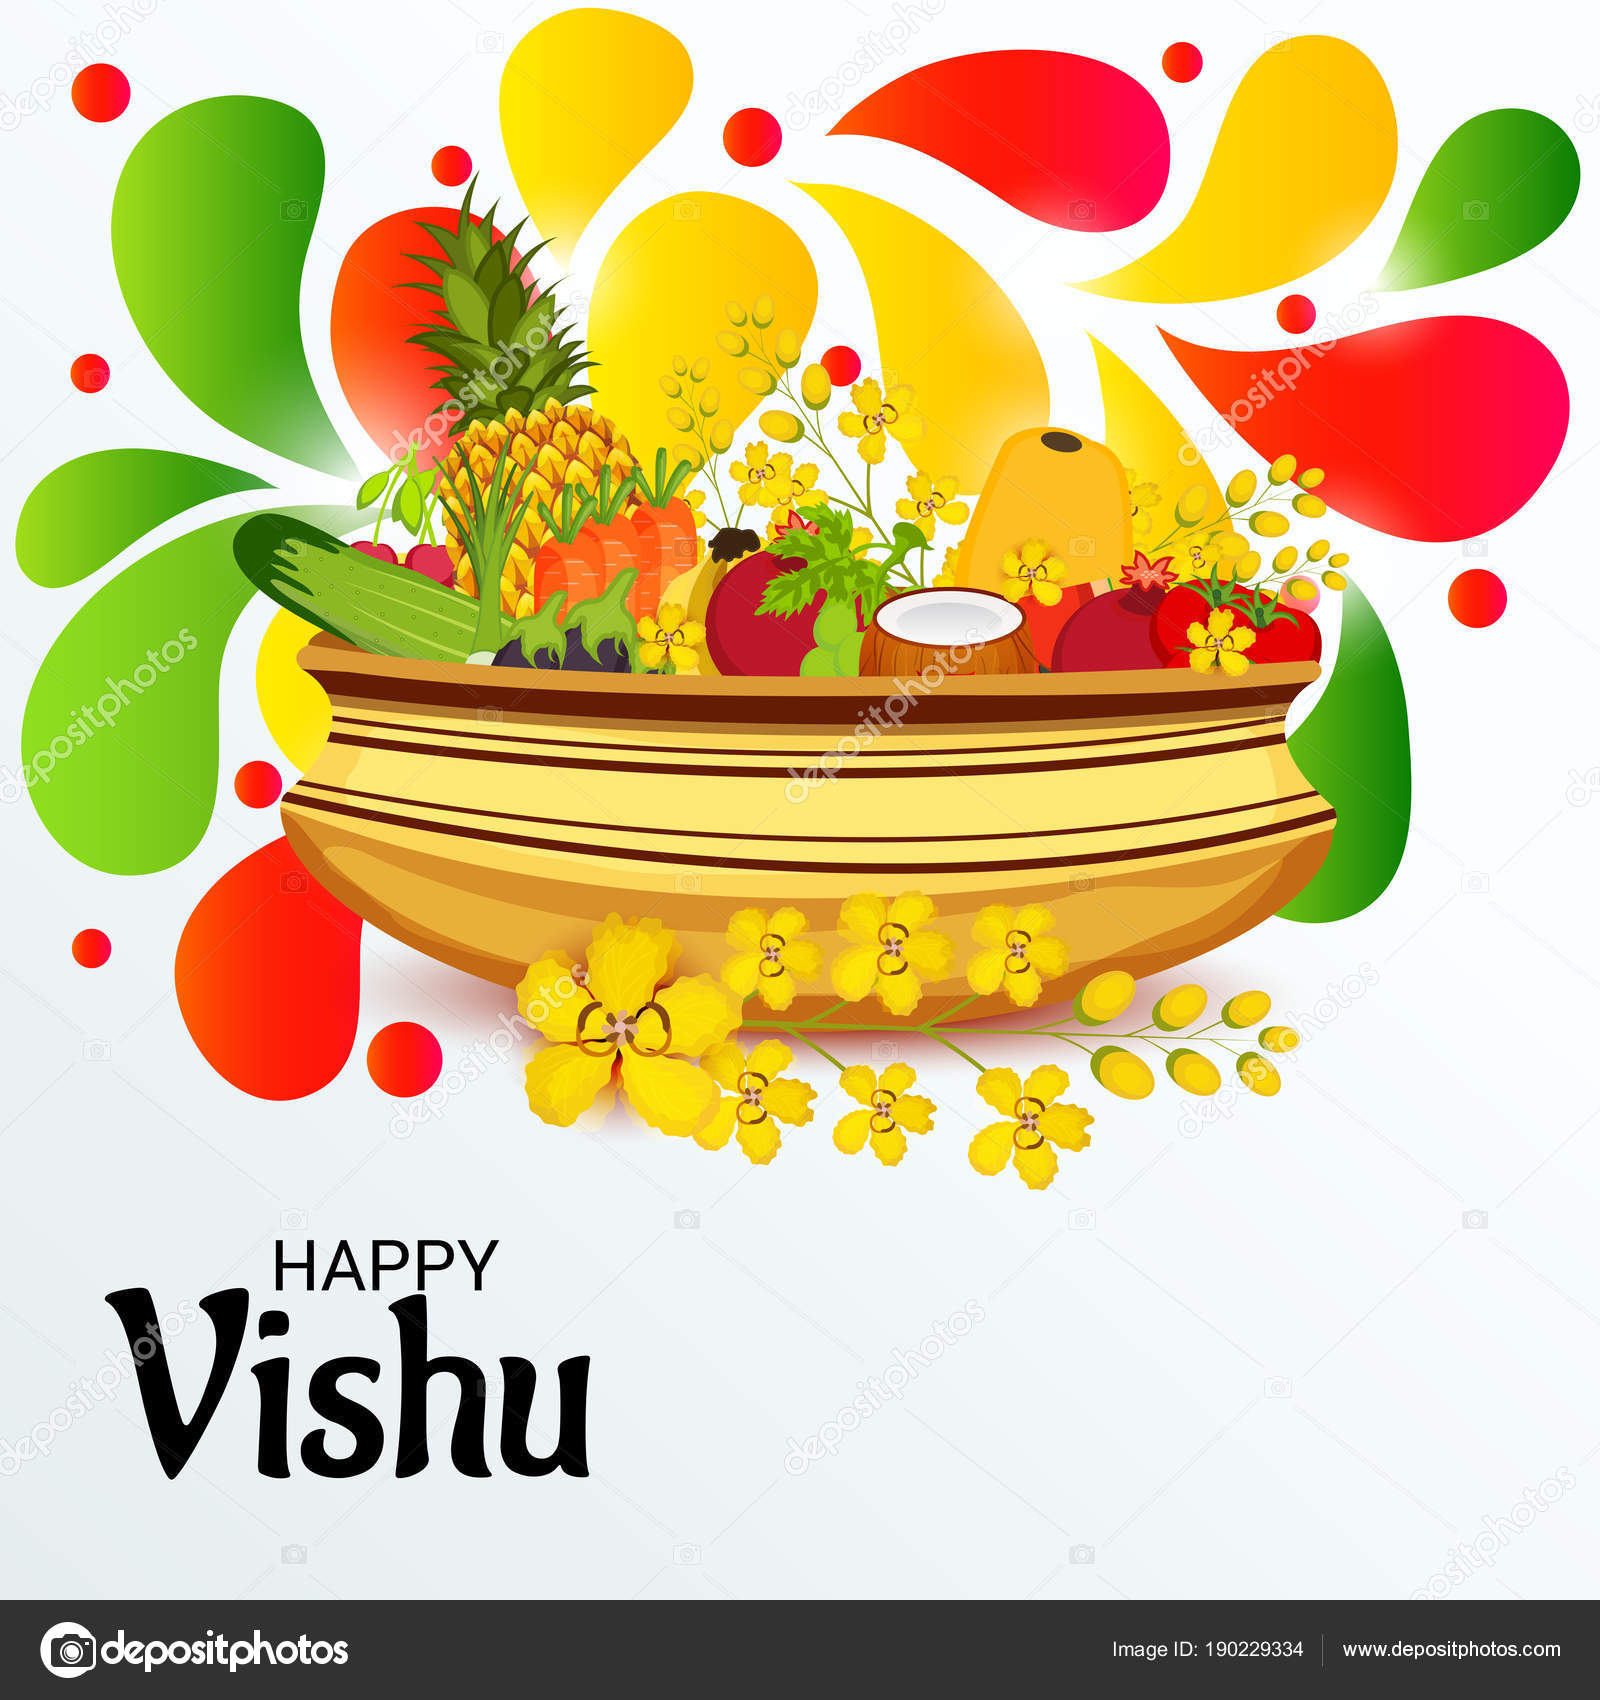 Vishu festival Vector Art Stock Images | Depositphotos